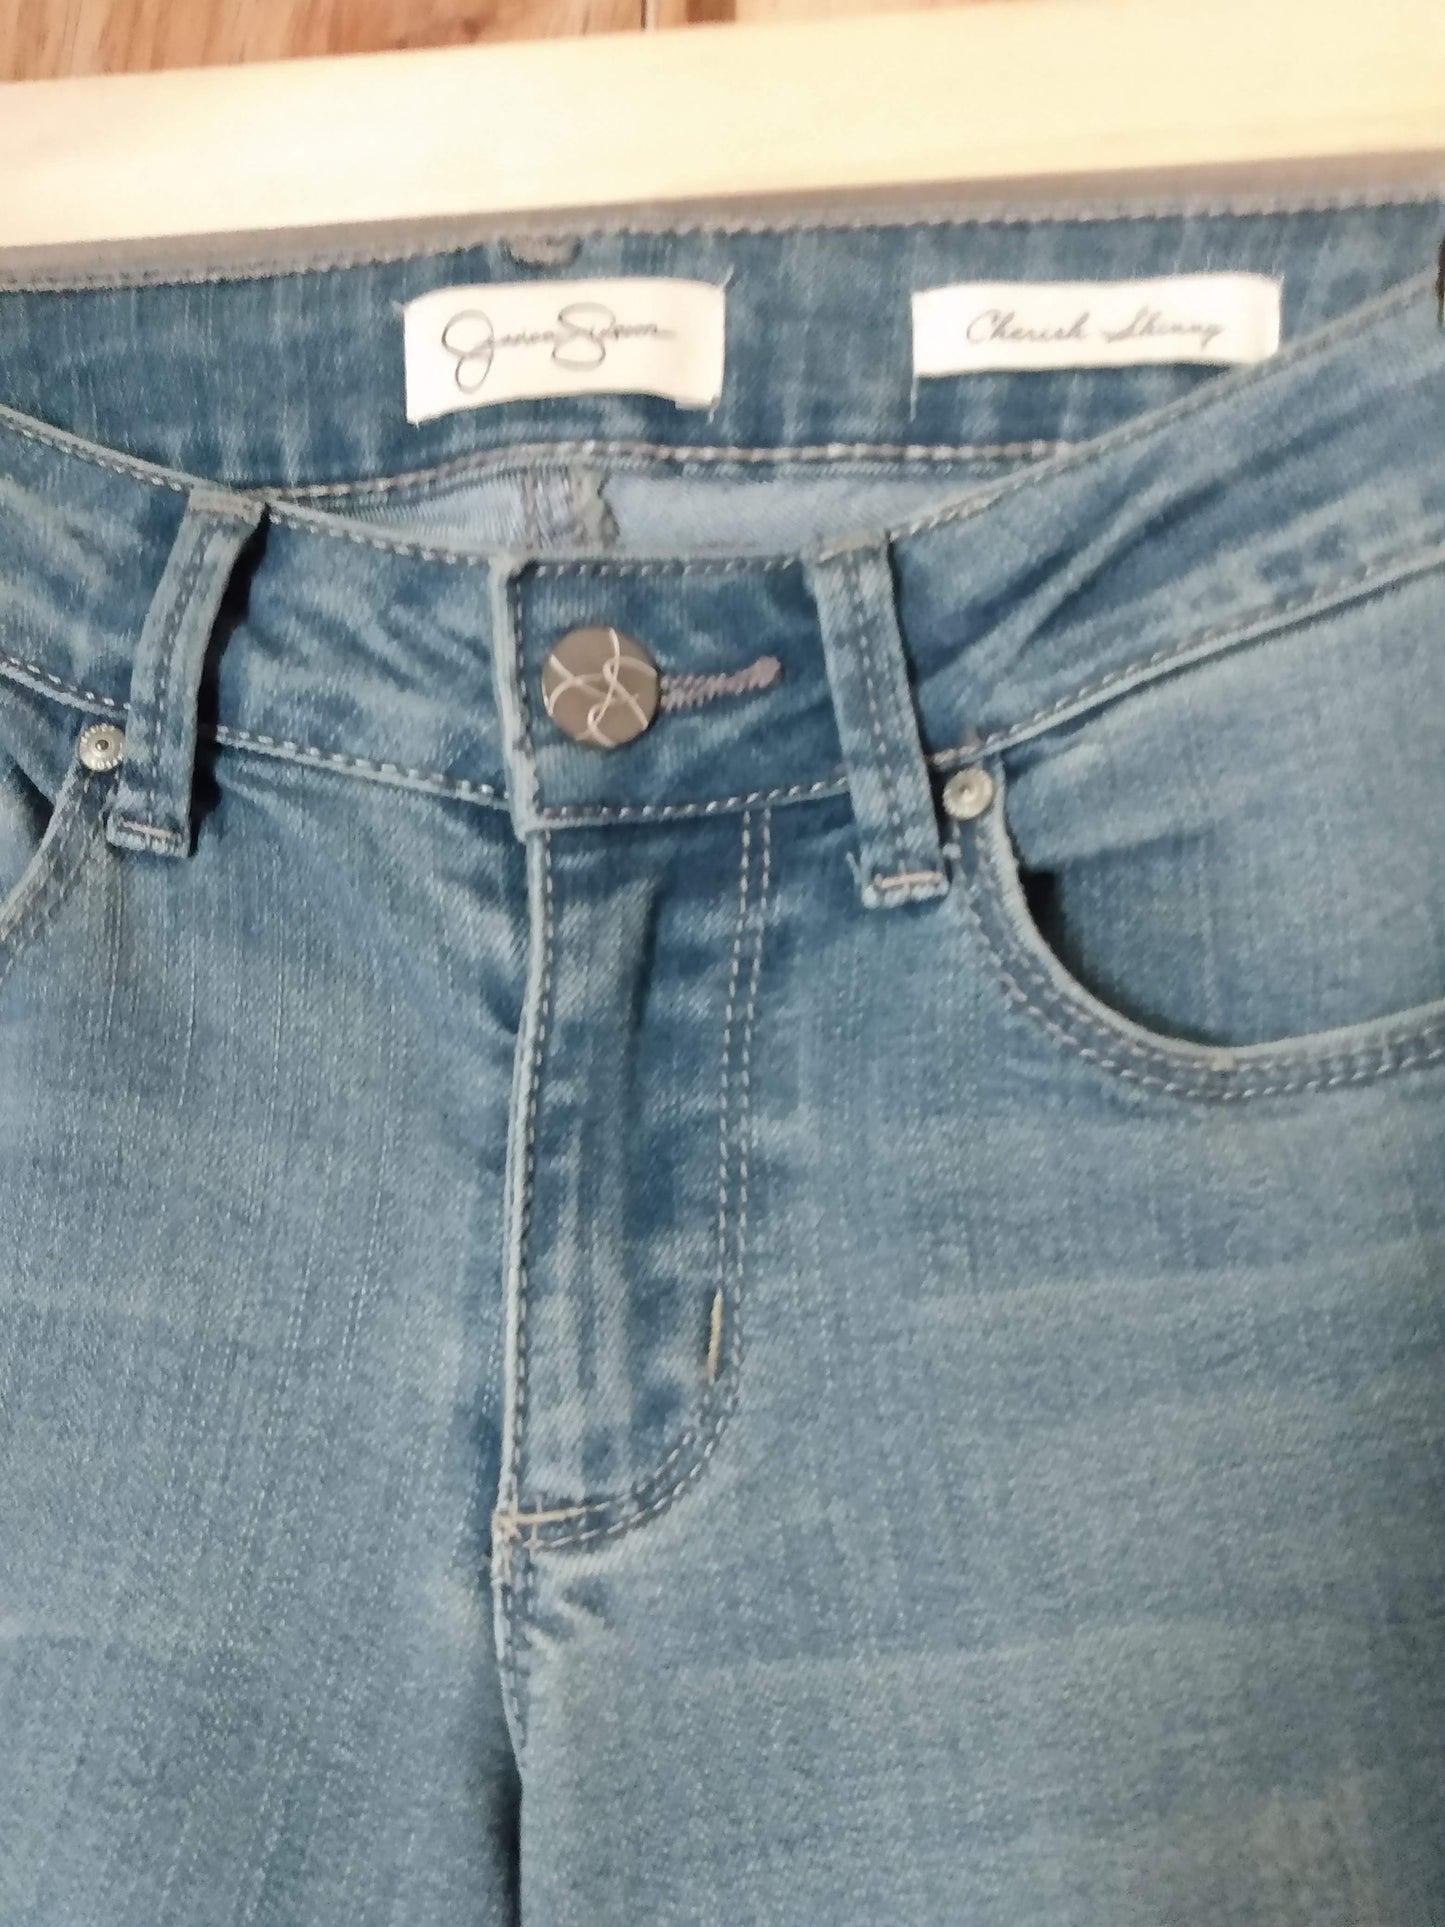 Women's Jessica Simpson jeans size 25